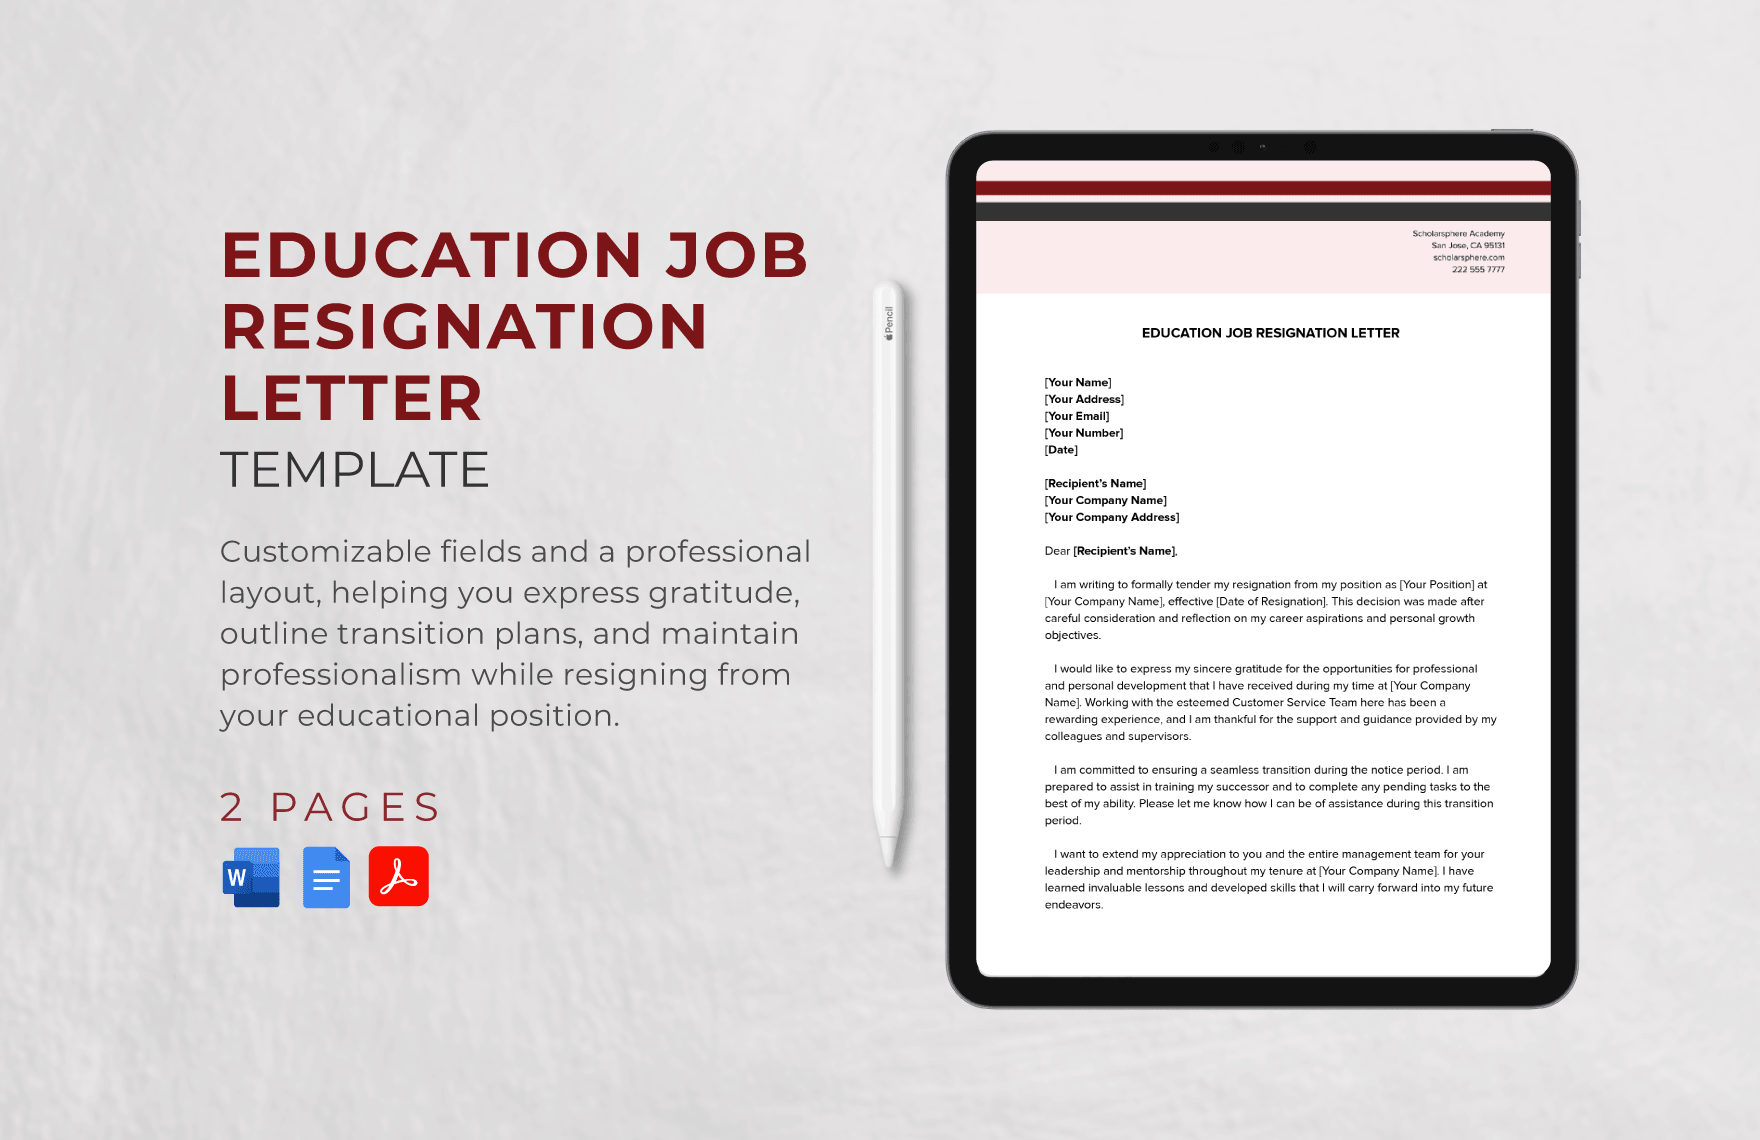 Education Job Resignation Letter Template in Word, Google Docs, PDF